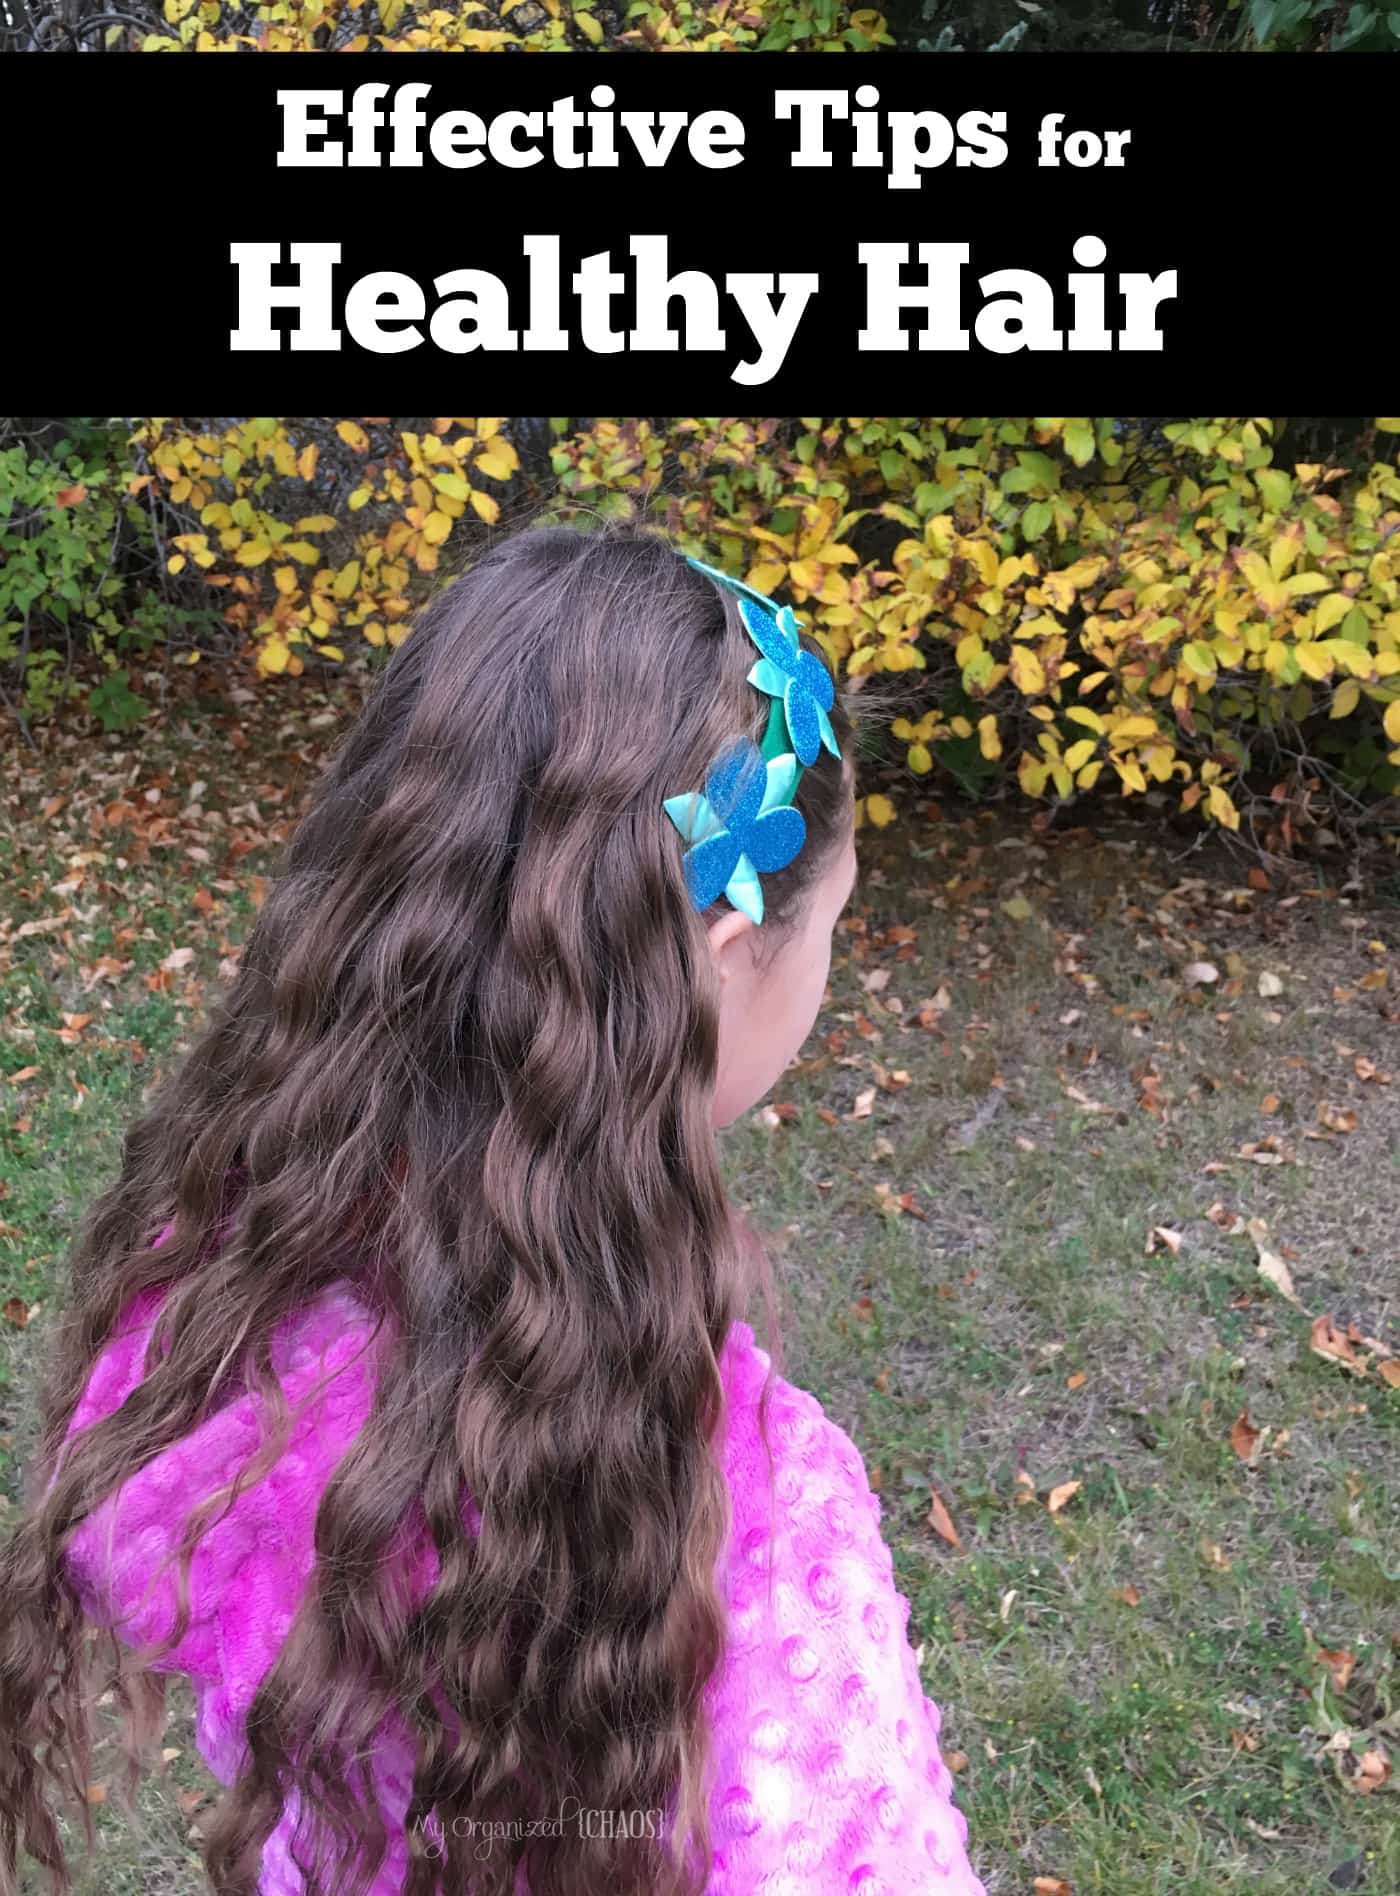 Effective Tips for Healthy Hair this fall season